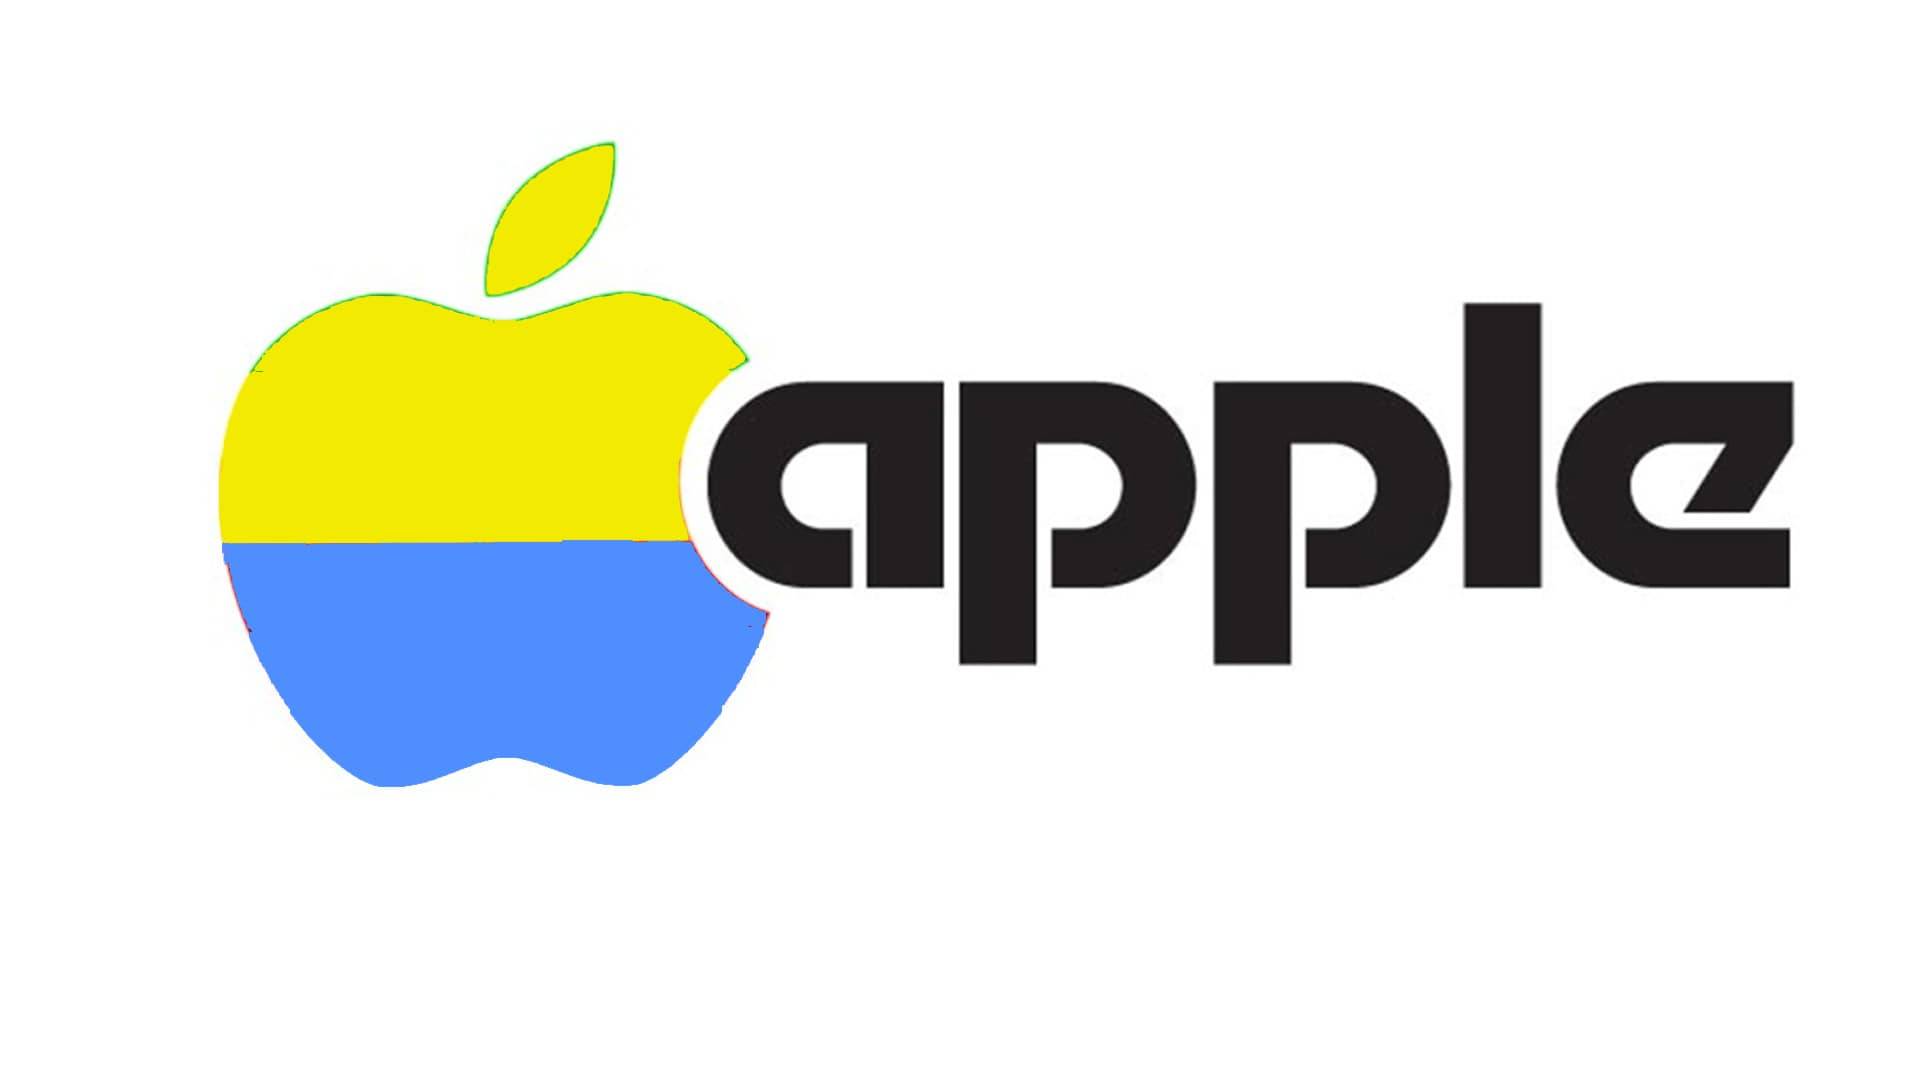 Apple ivnestment in Ukraine